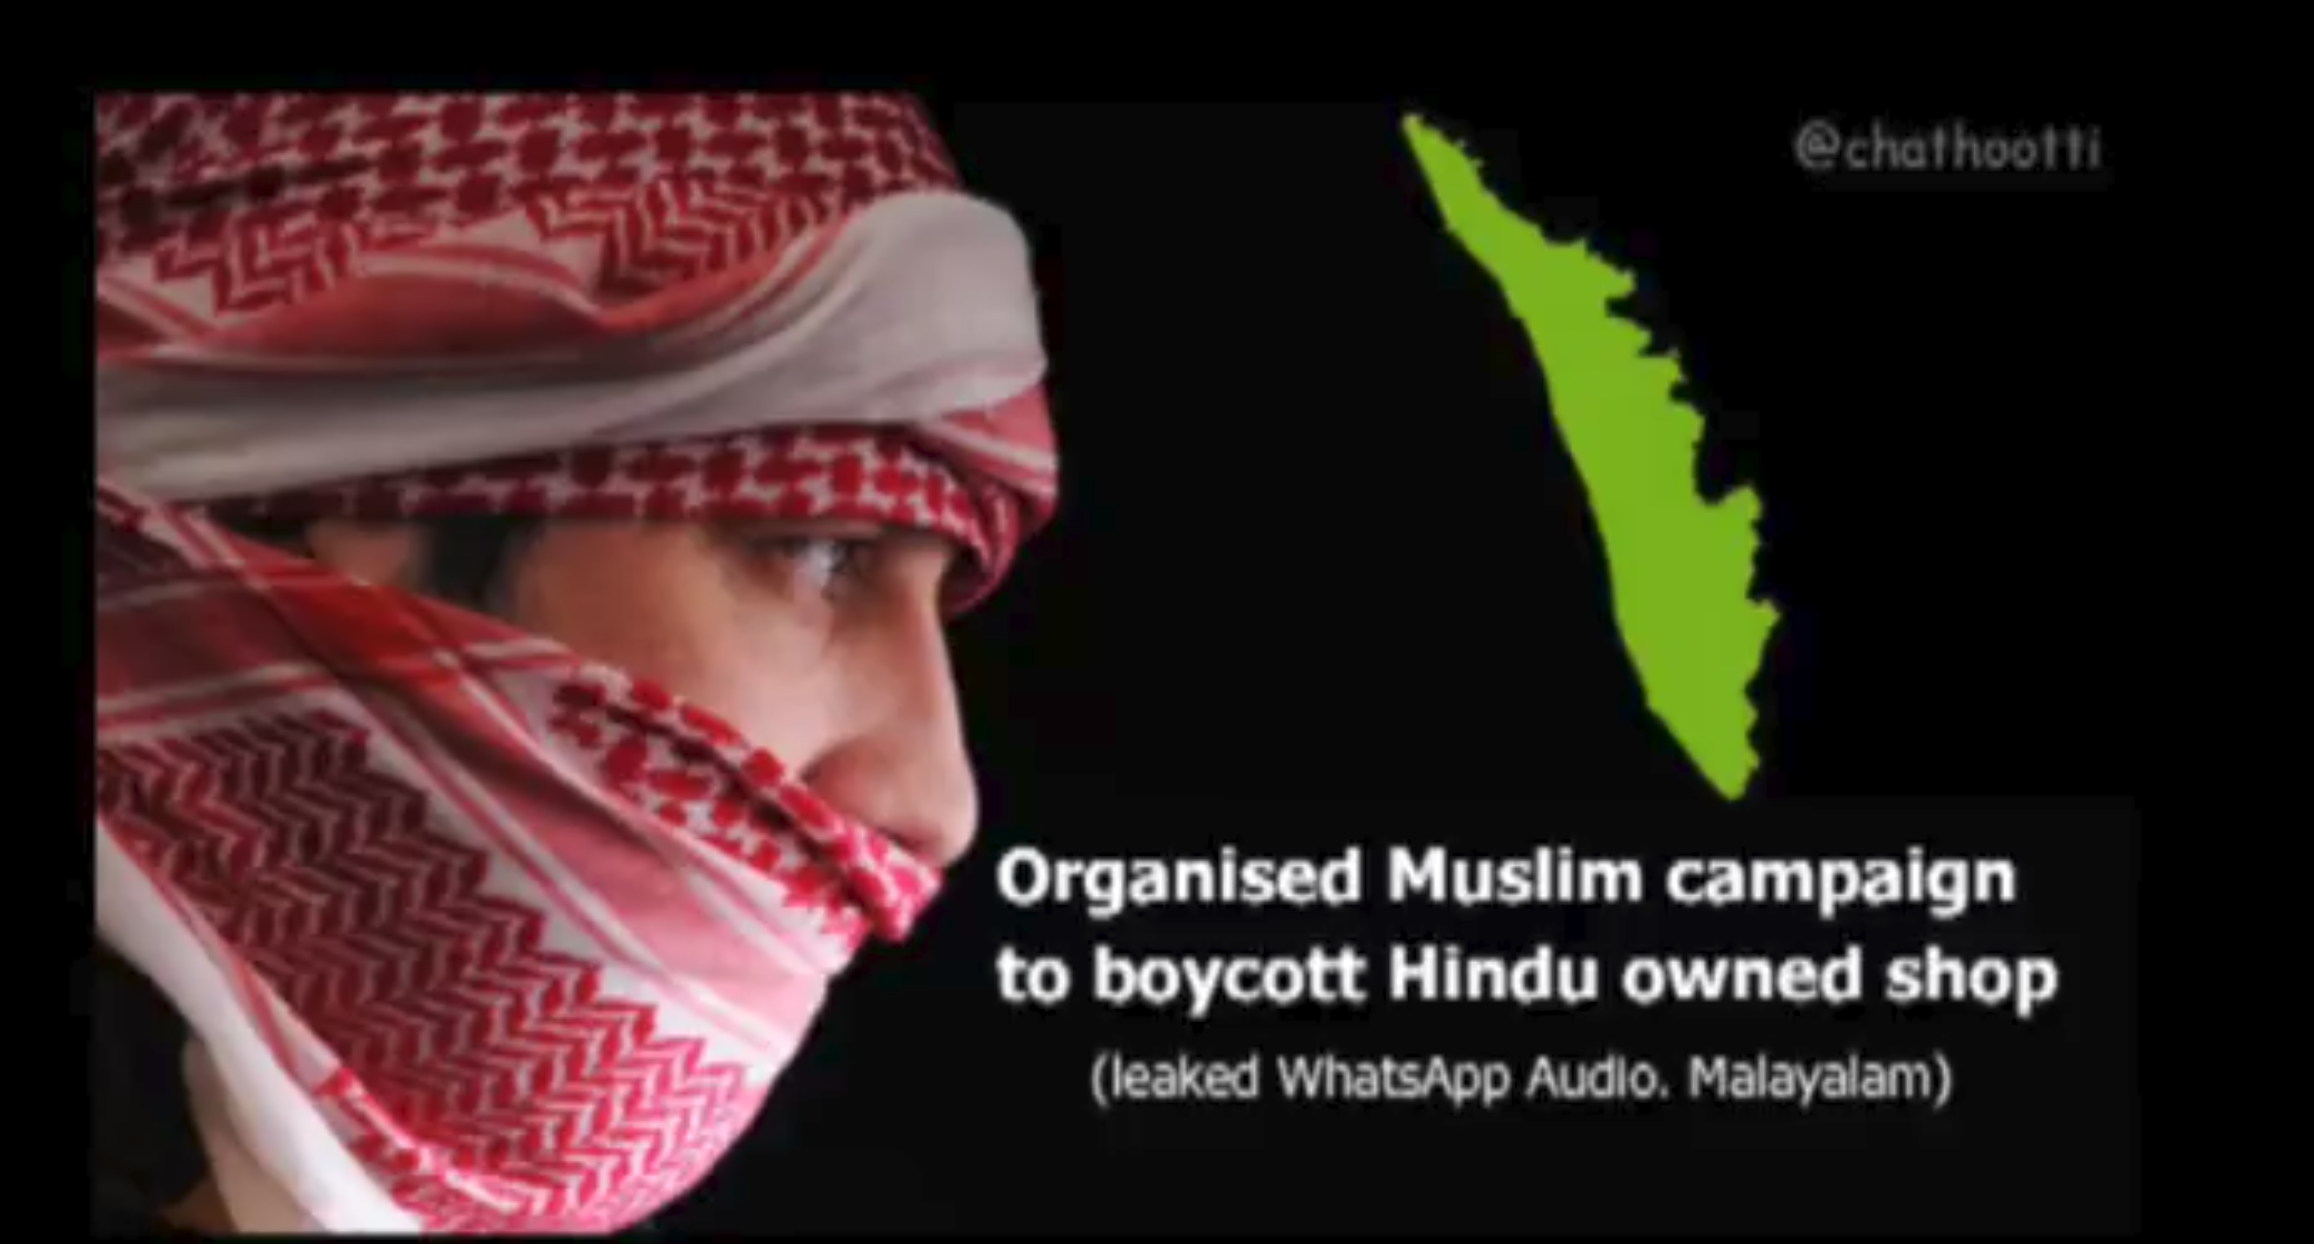                               Muslims in Kerala Organize Boycott of Hindu owned Store                             
                              